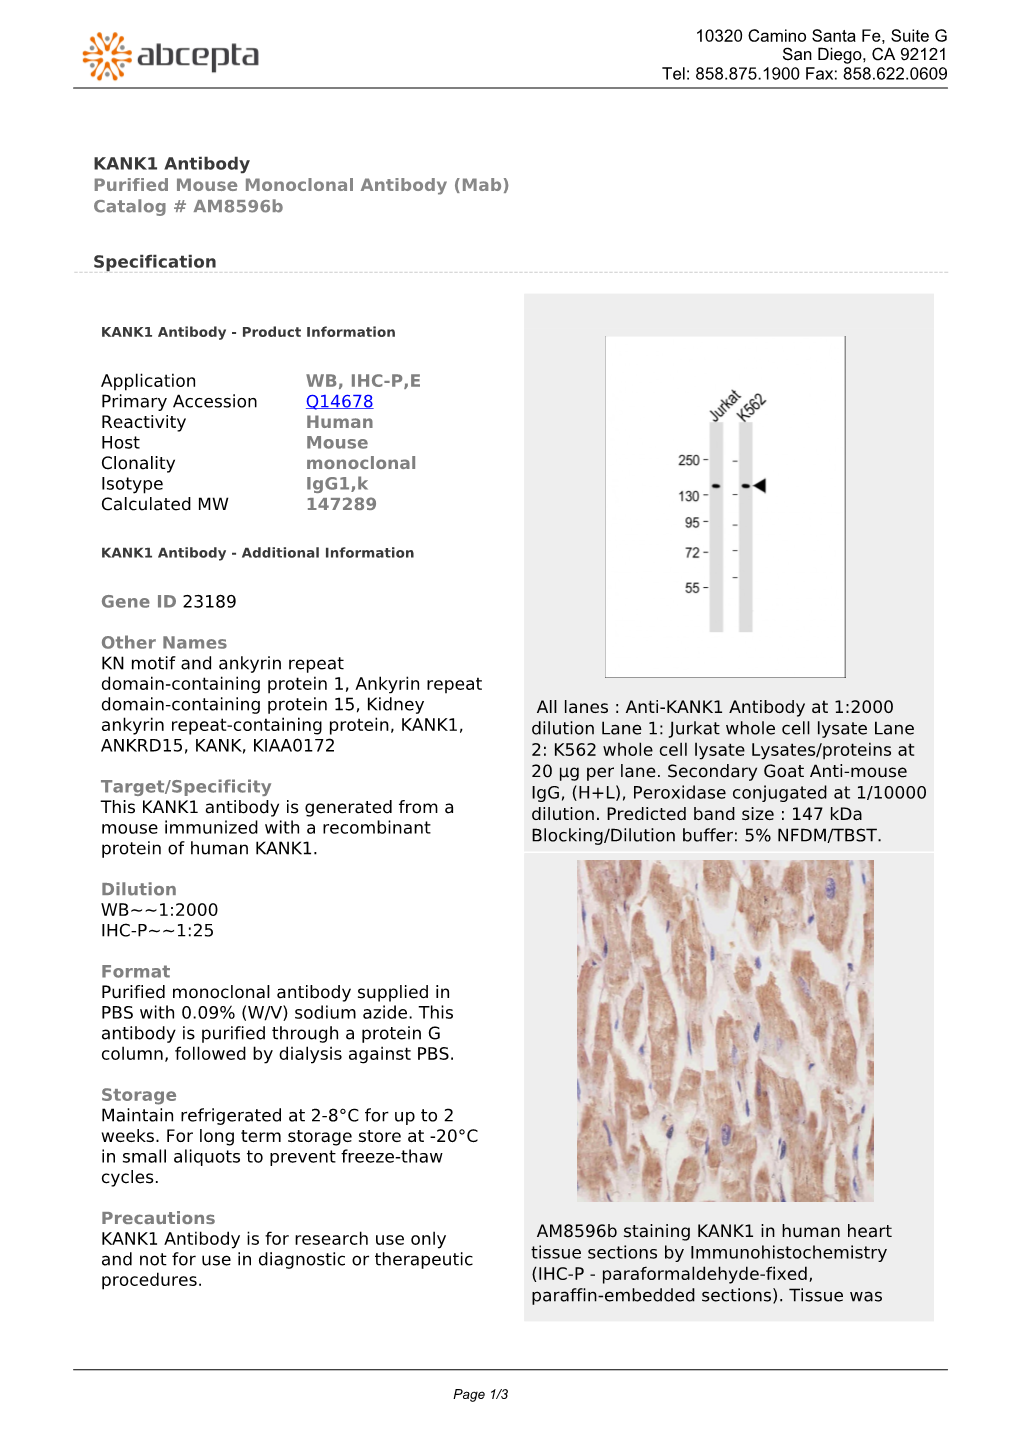 KANK1 Antibody Purified Mouse Monoclonal Antibody (Mab) Catalog # Am8596b